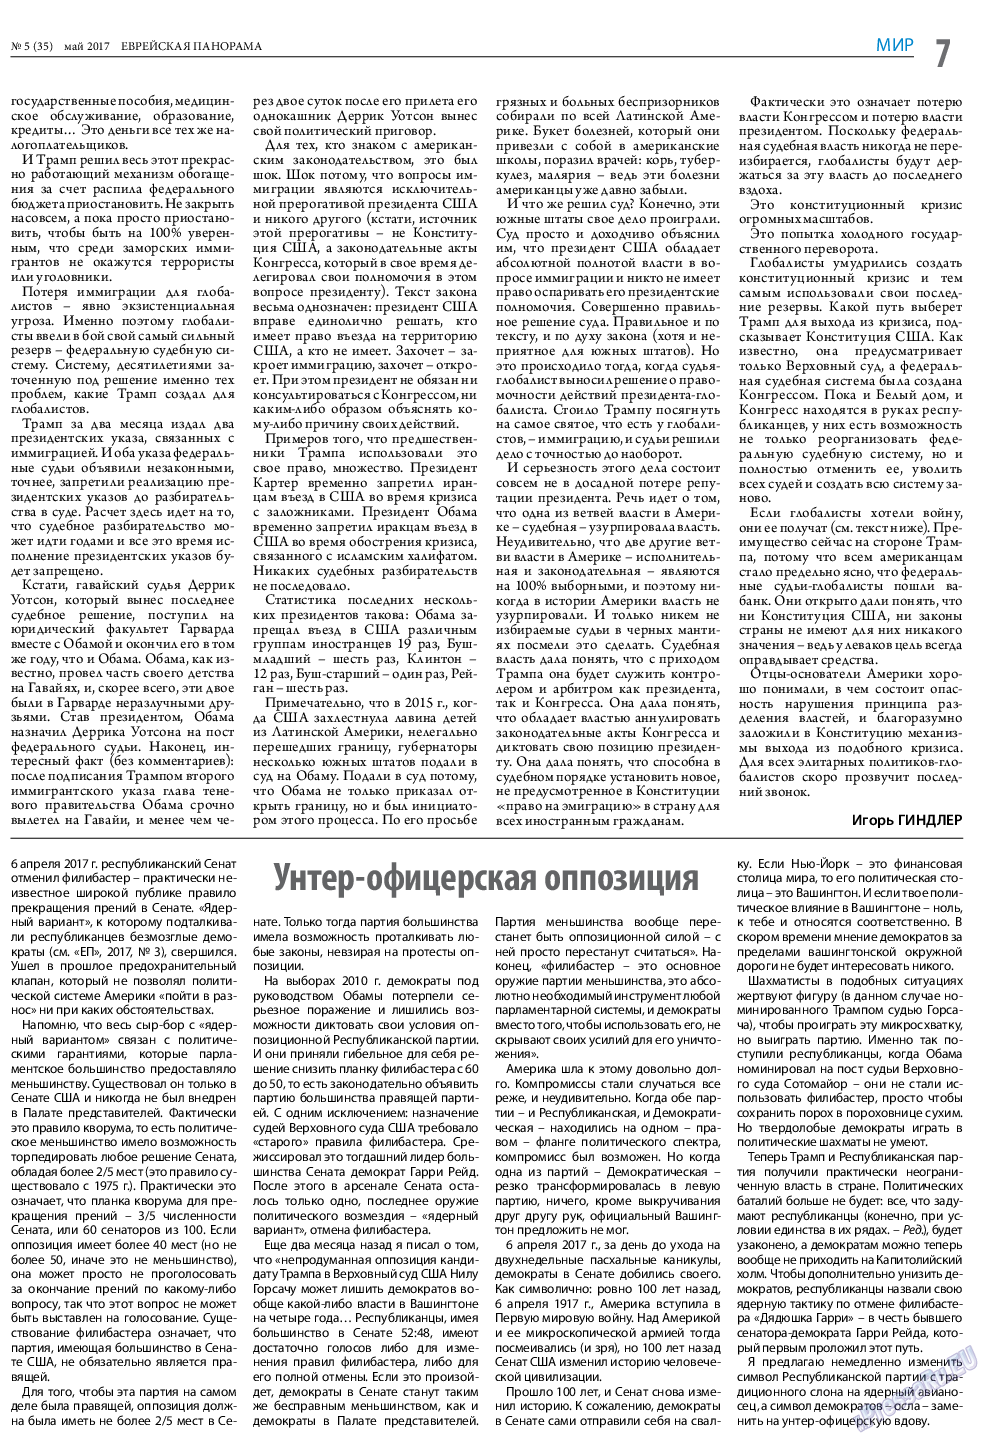 Еврейская панорама, газета. 2017 №5 стр.7